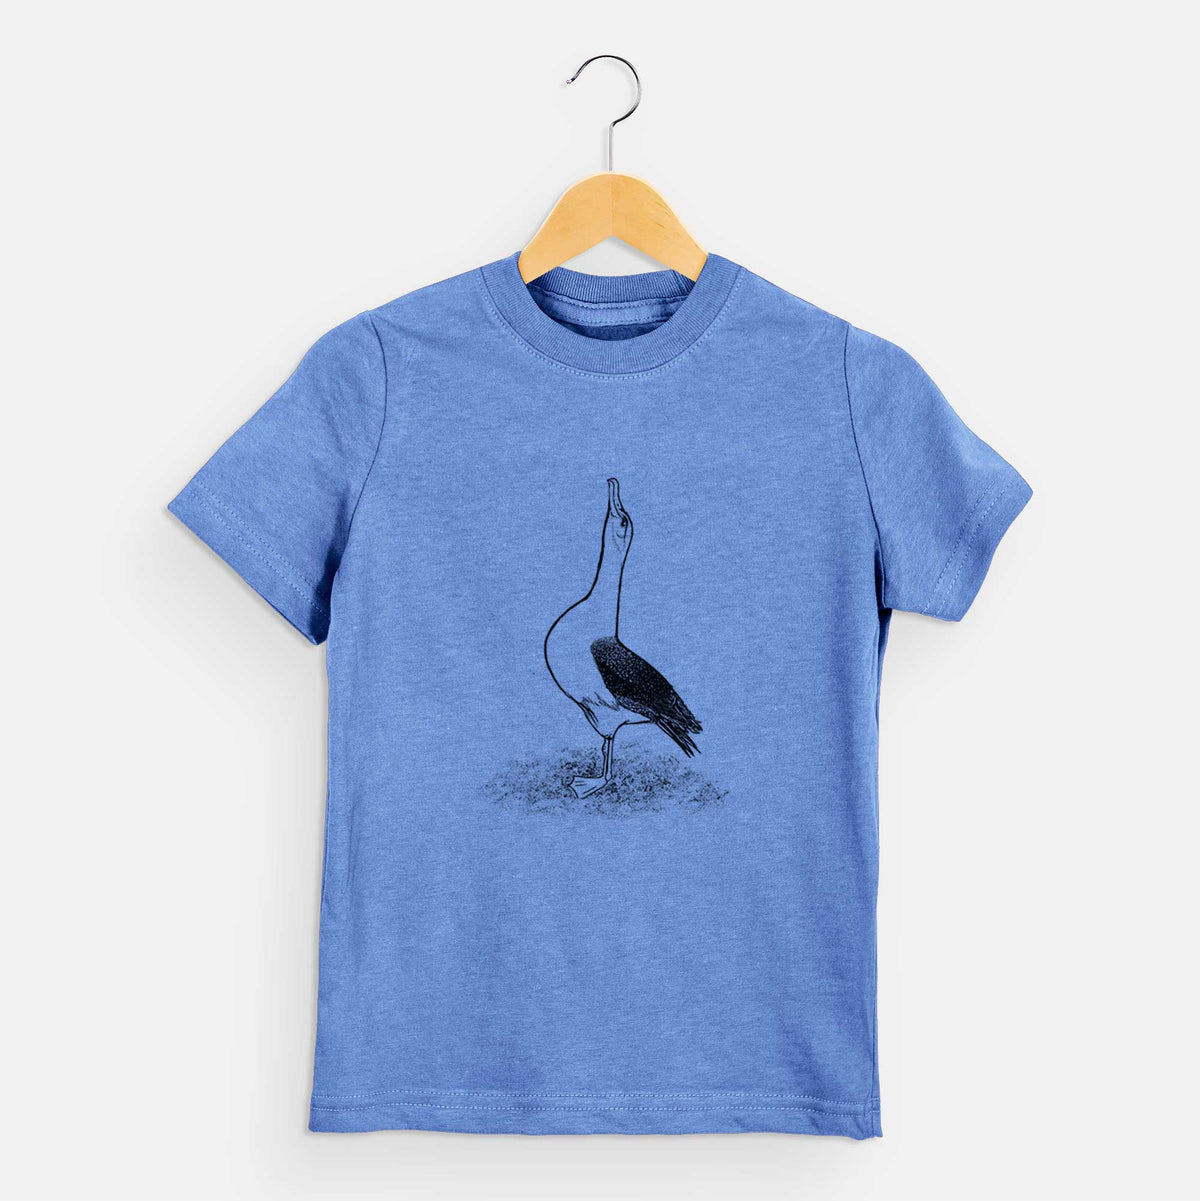 Diomedea exulans - Wandering Albatross - Kids Shirt